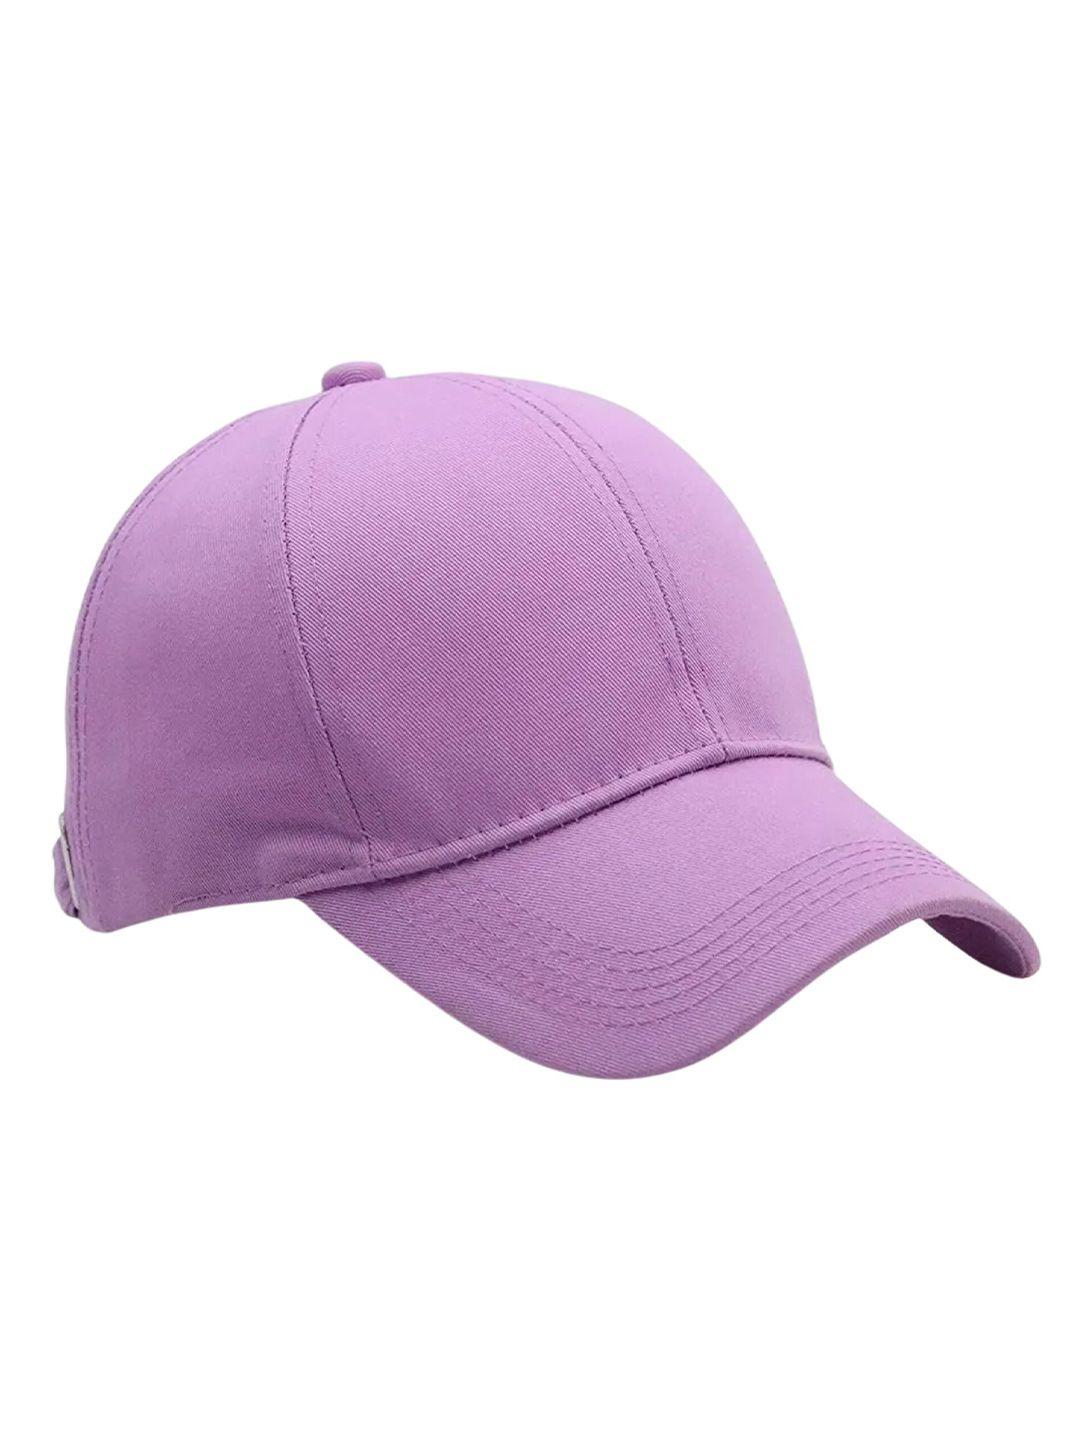 zacharias unisex purple baseball cap